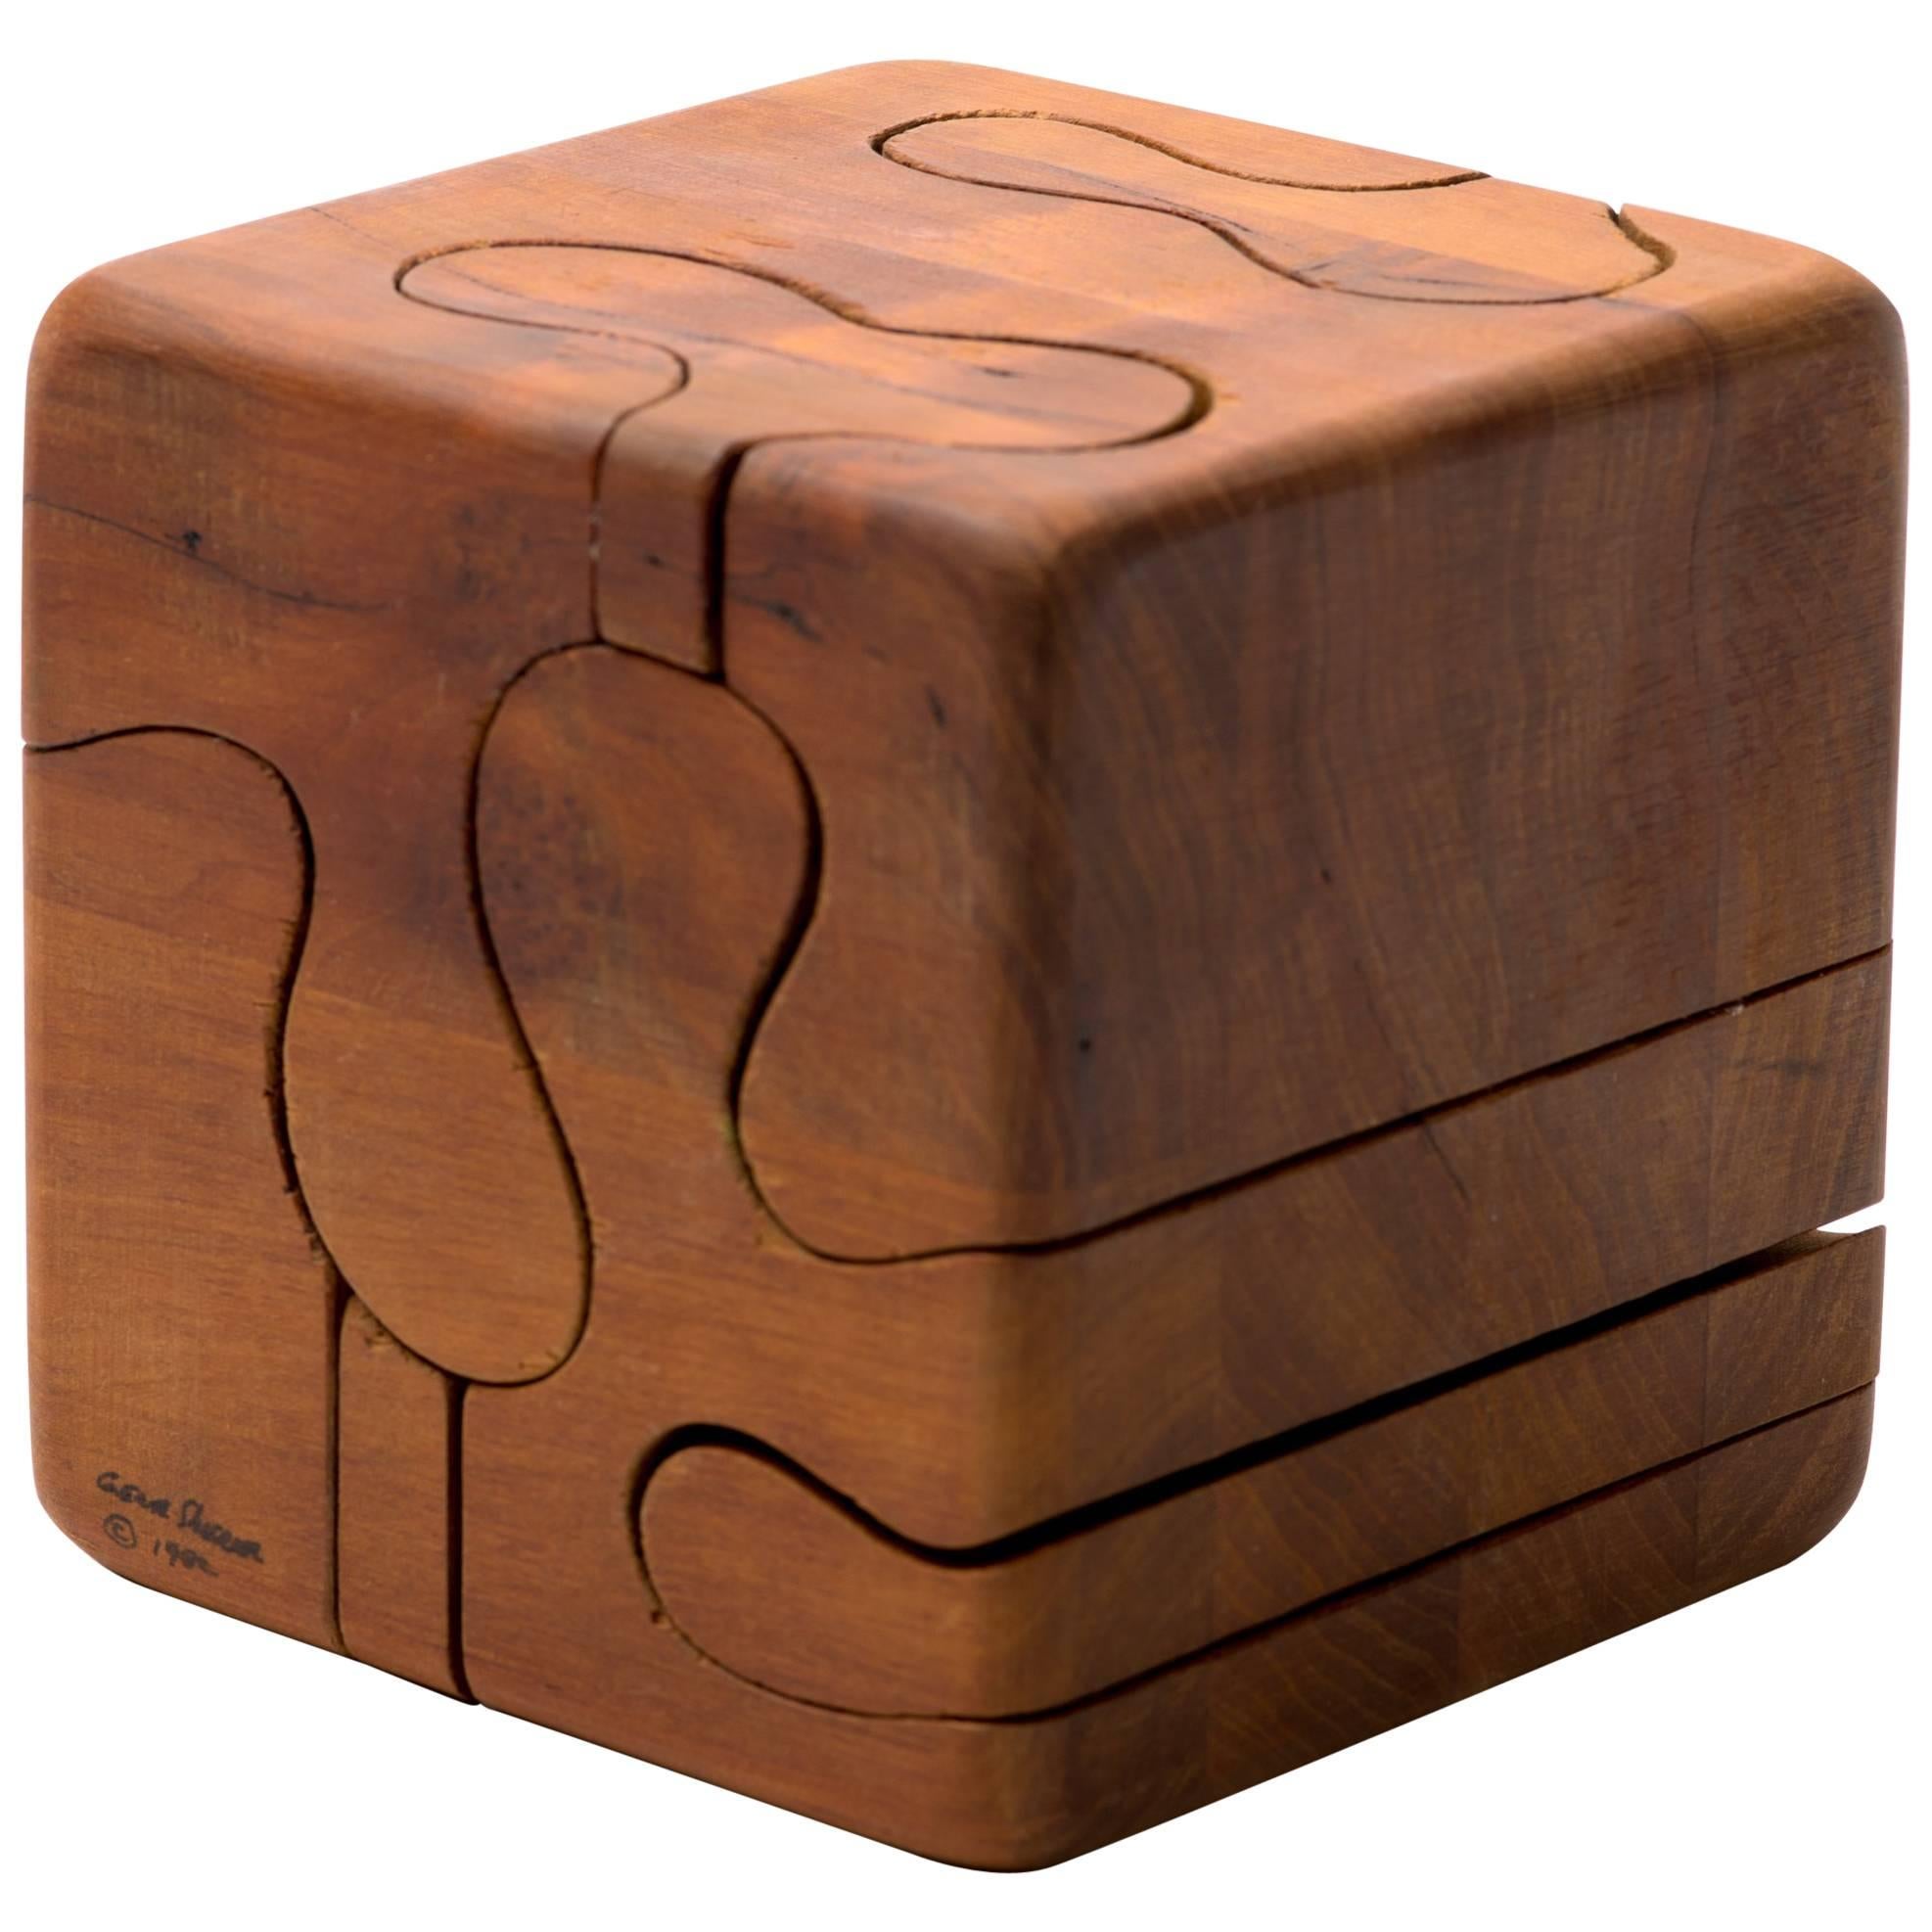 Gene Sherer Wooden Cube Puzzle